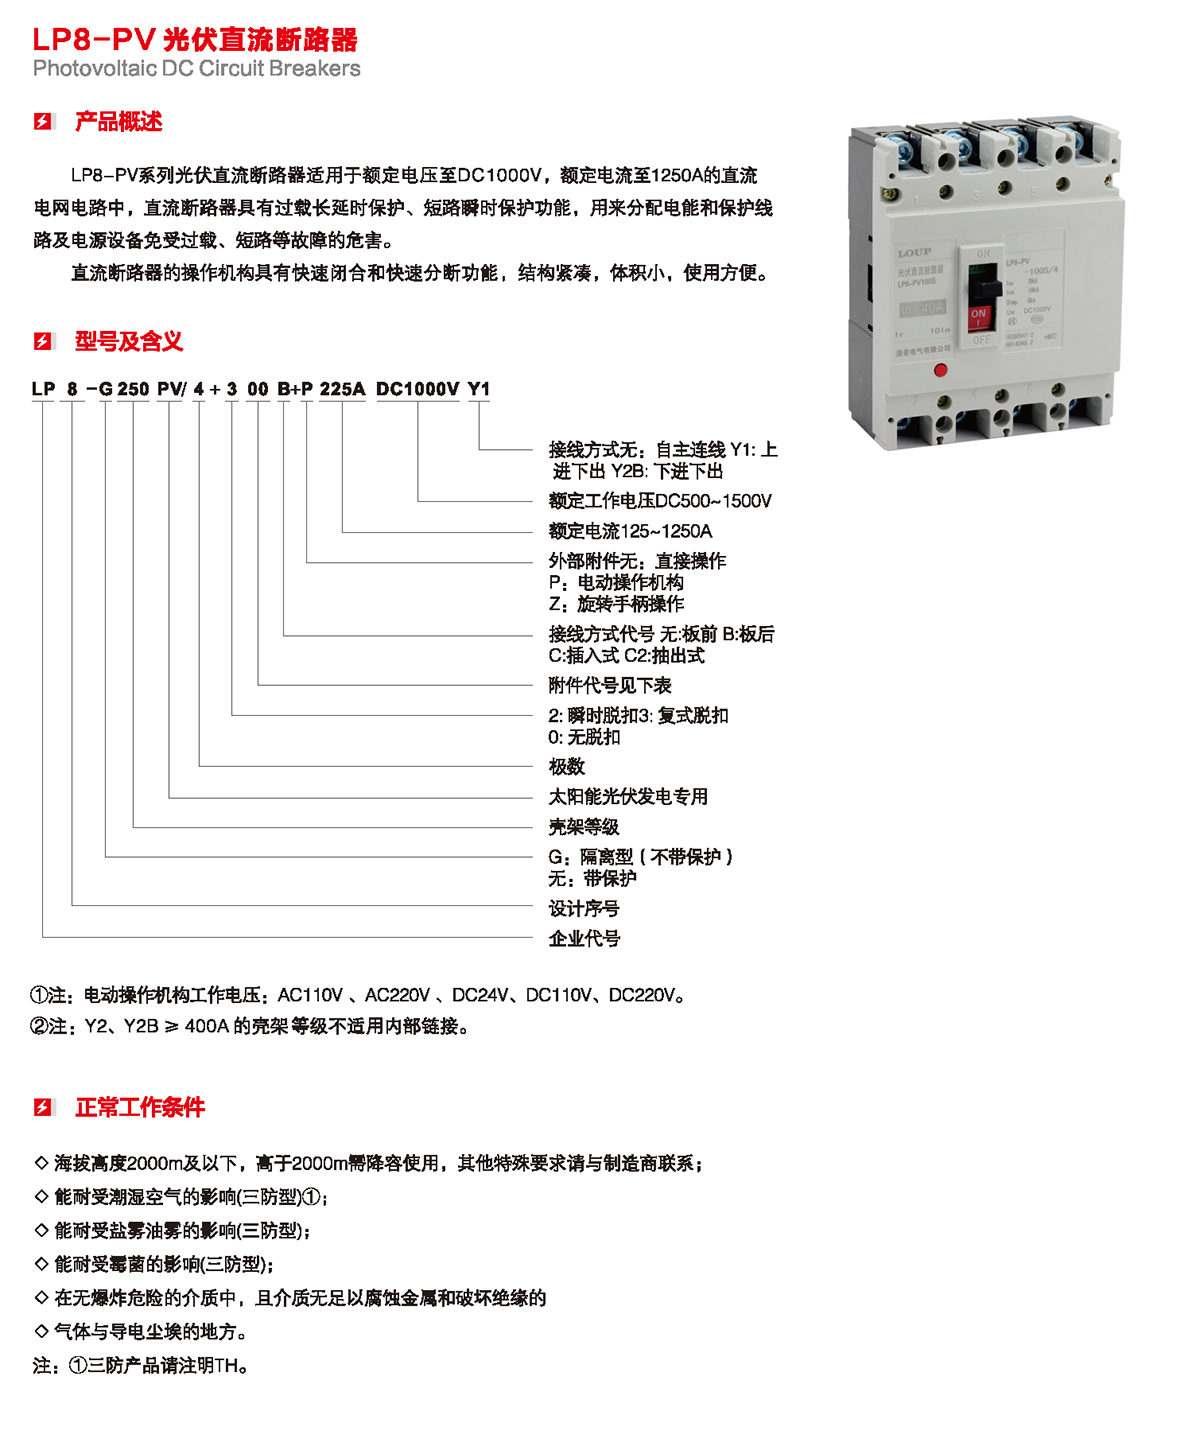 LP8-PV 光伏直流斷路器產品概述、型號含義、正常工作條件